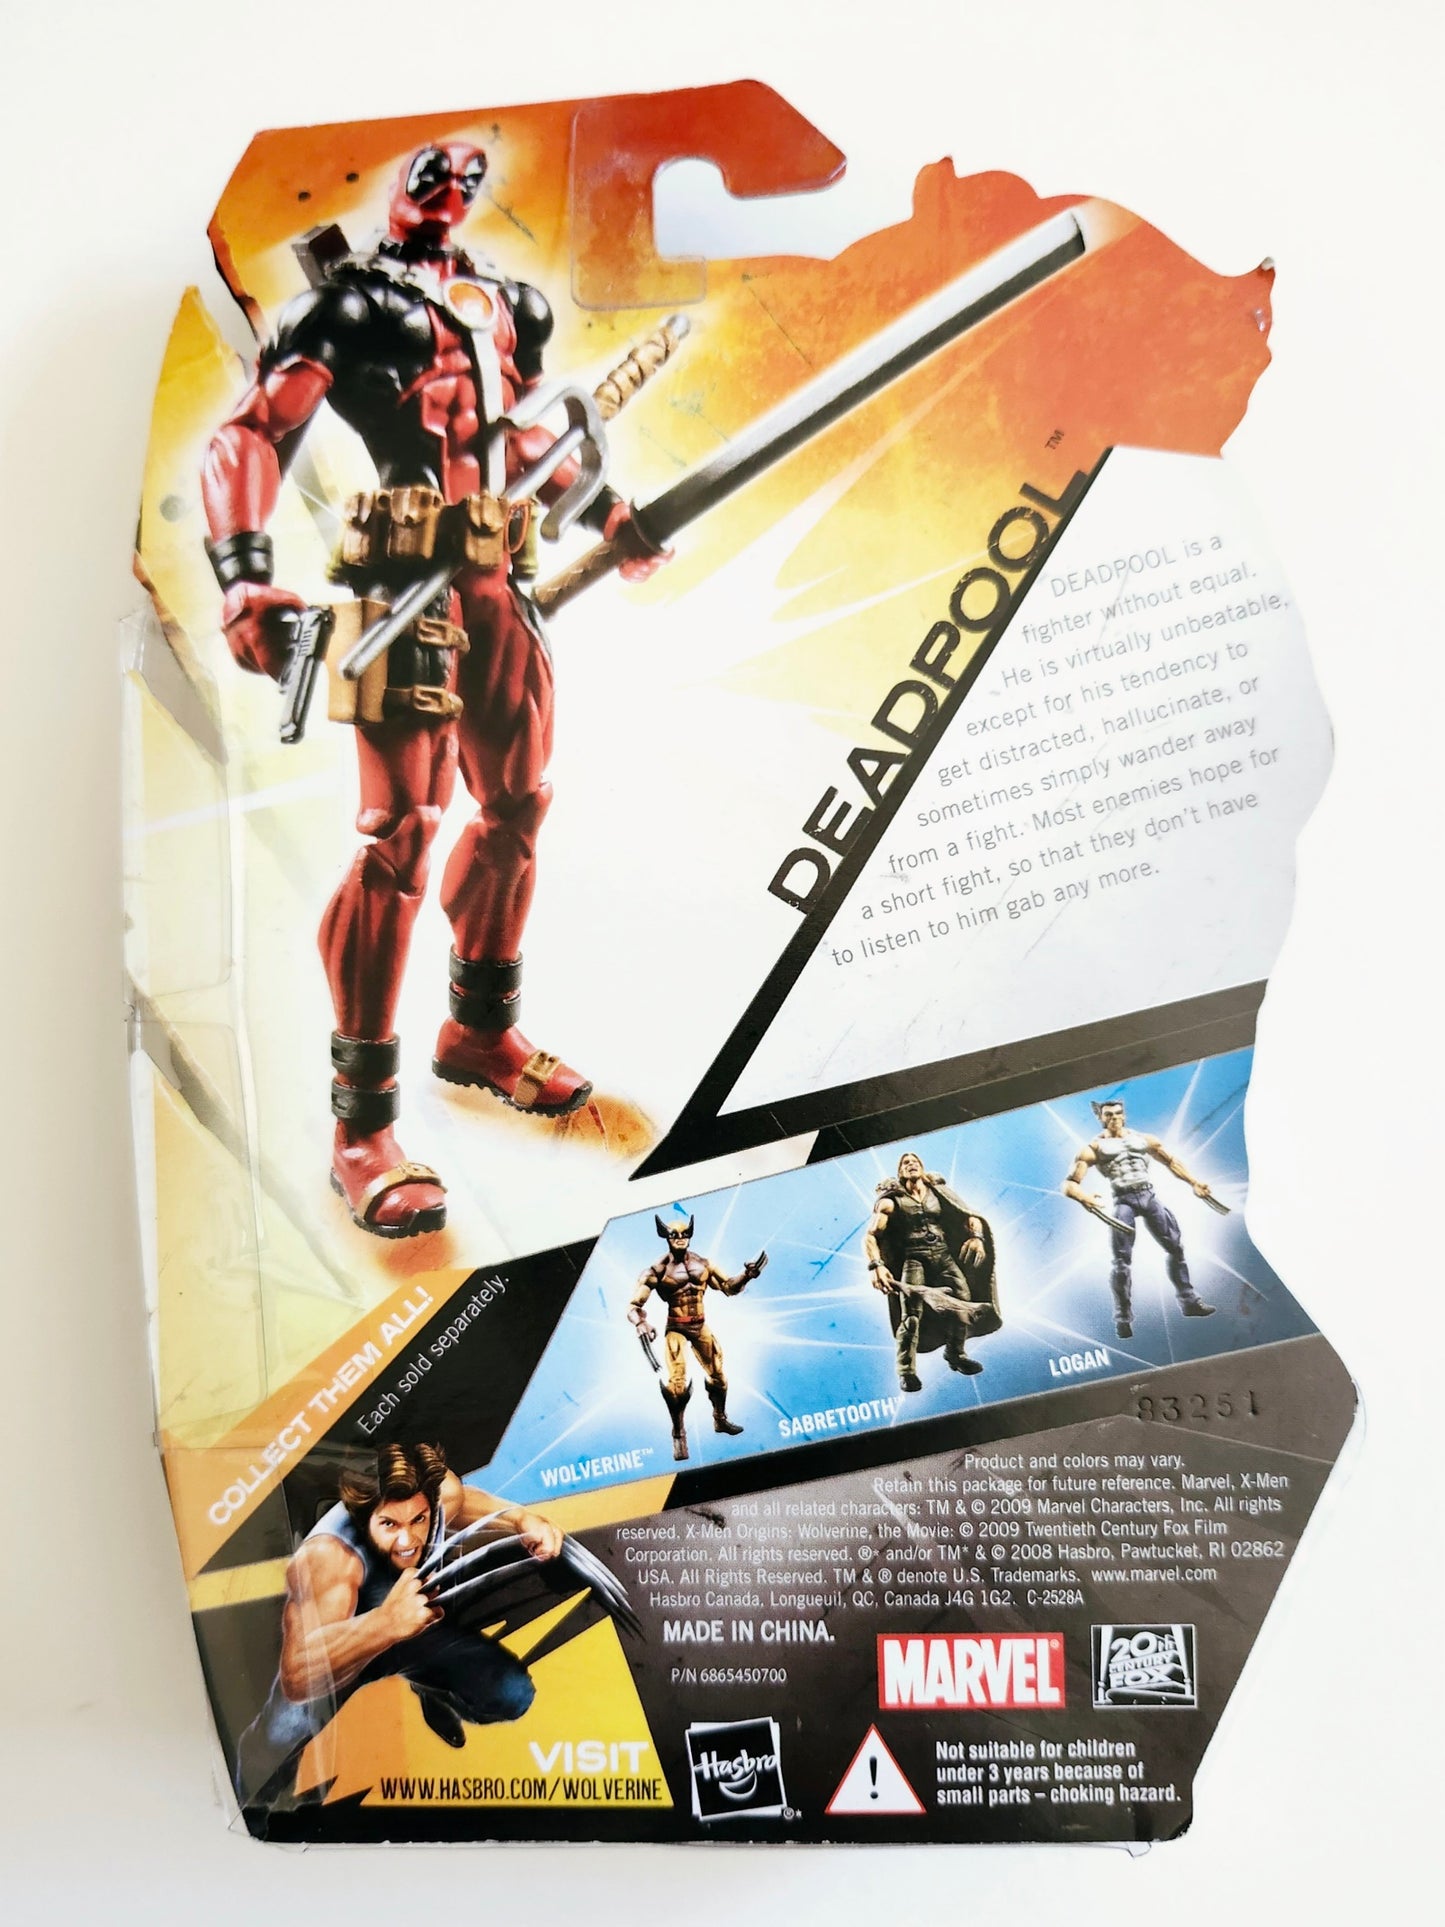 X-Men Origins: Wolverine Deadpool (Comic Series) 3.75-Inch Action Figure